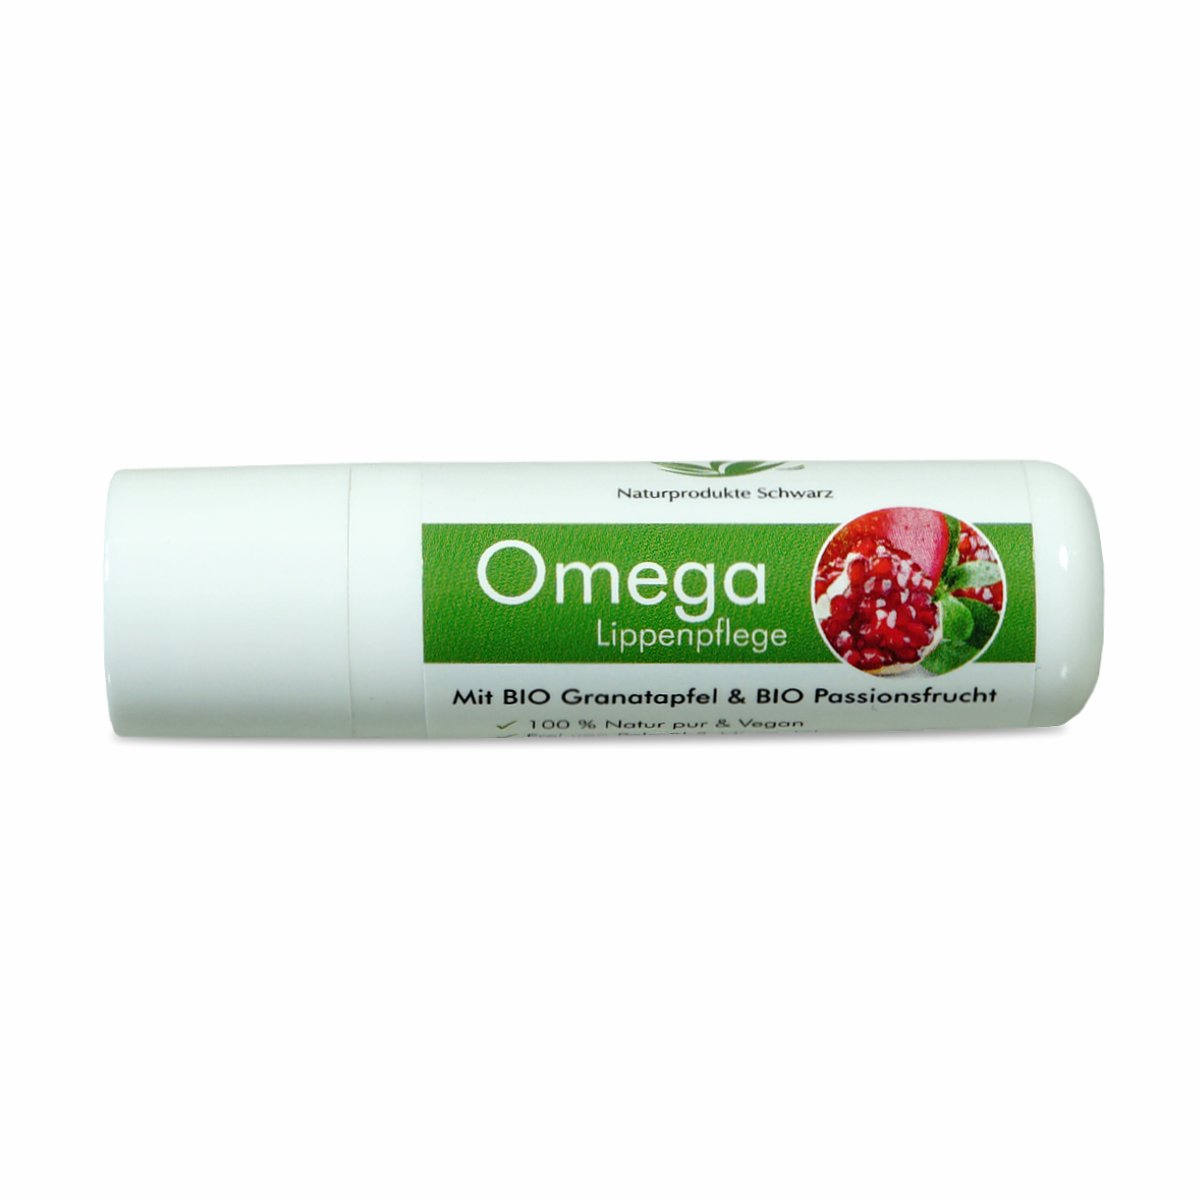 Omega Lippenpflege - Ohne Glycerin - Mit BIO Granatapfel